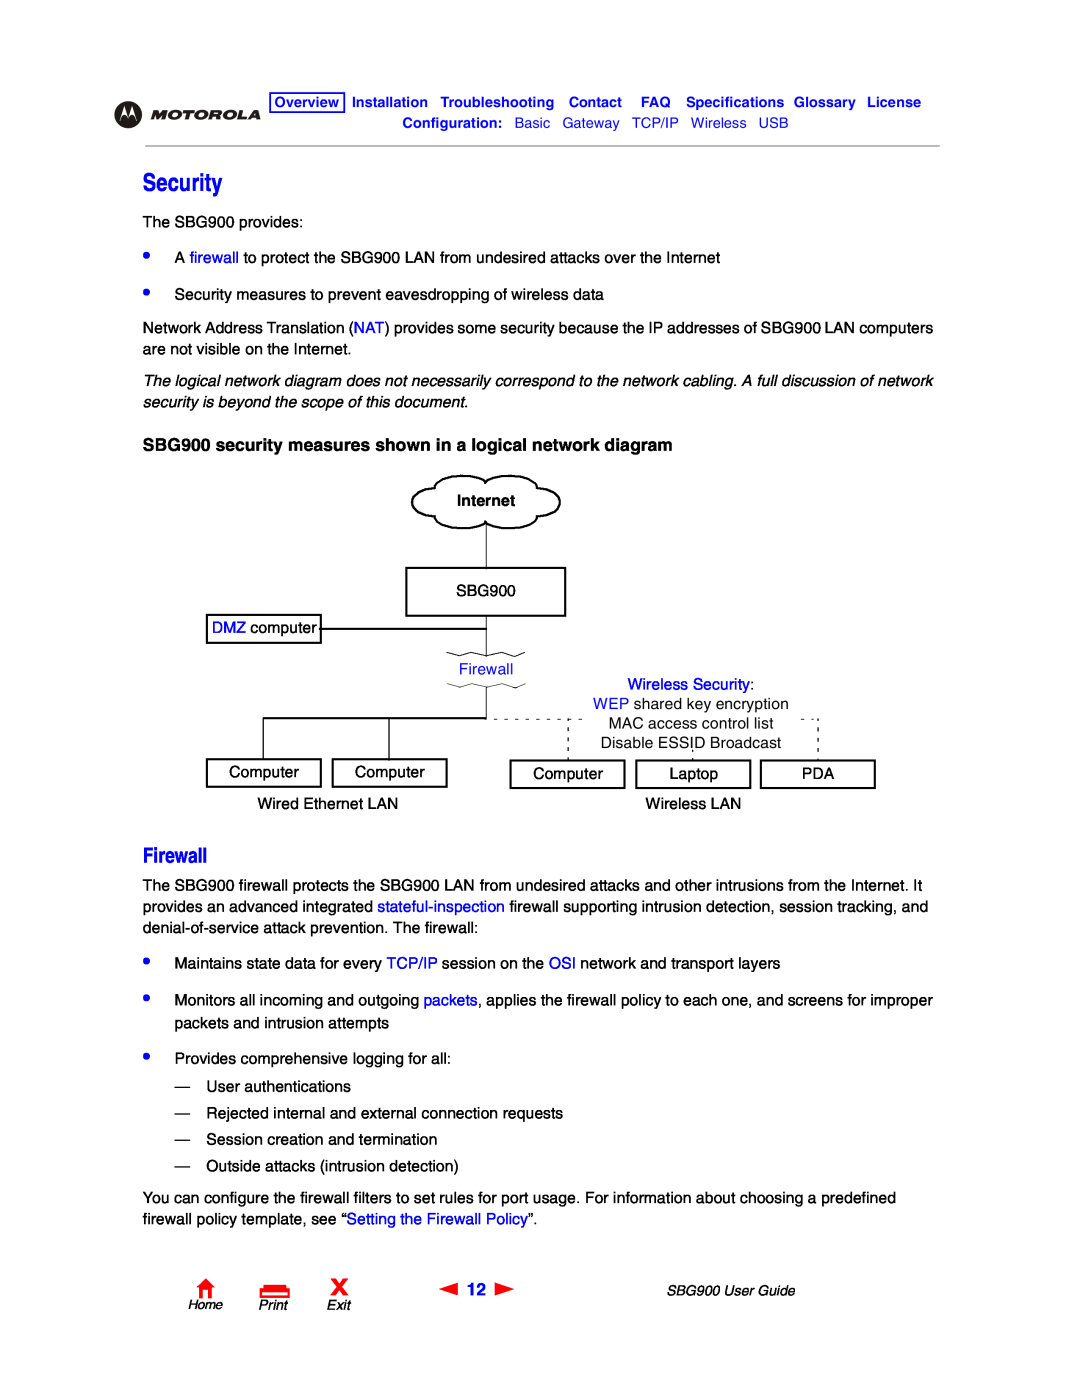 Motorola manual Firewall, SBG900 security measures shown in a logical network diagram, Internet, Wireless Security 